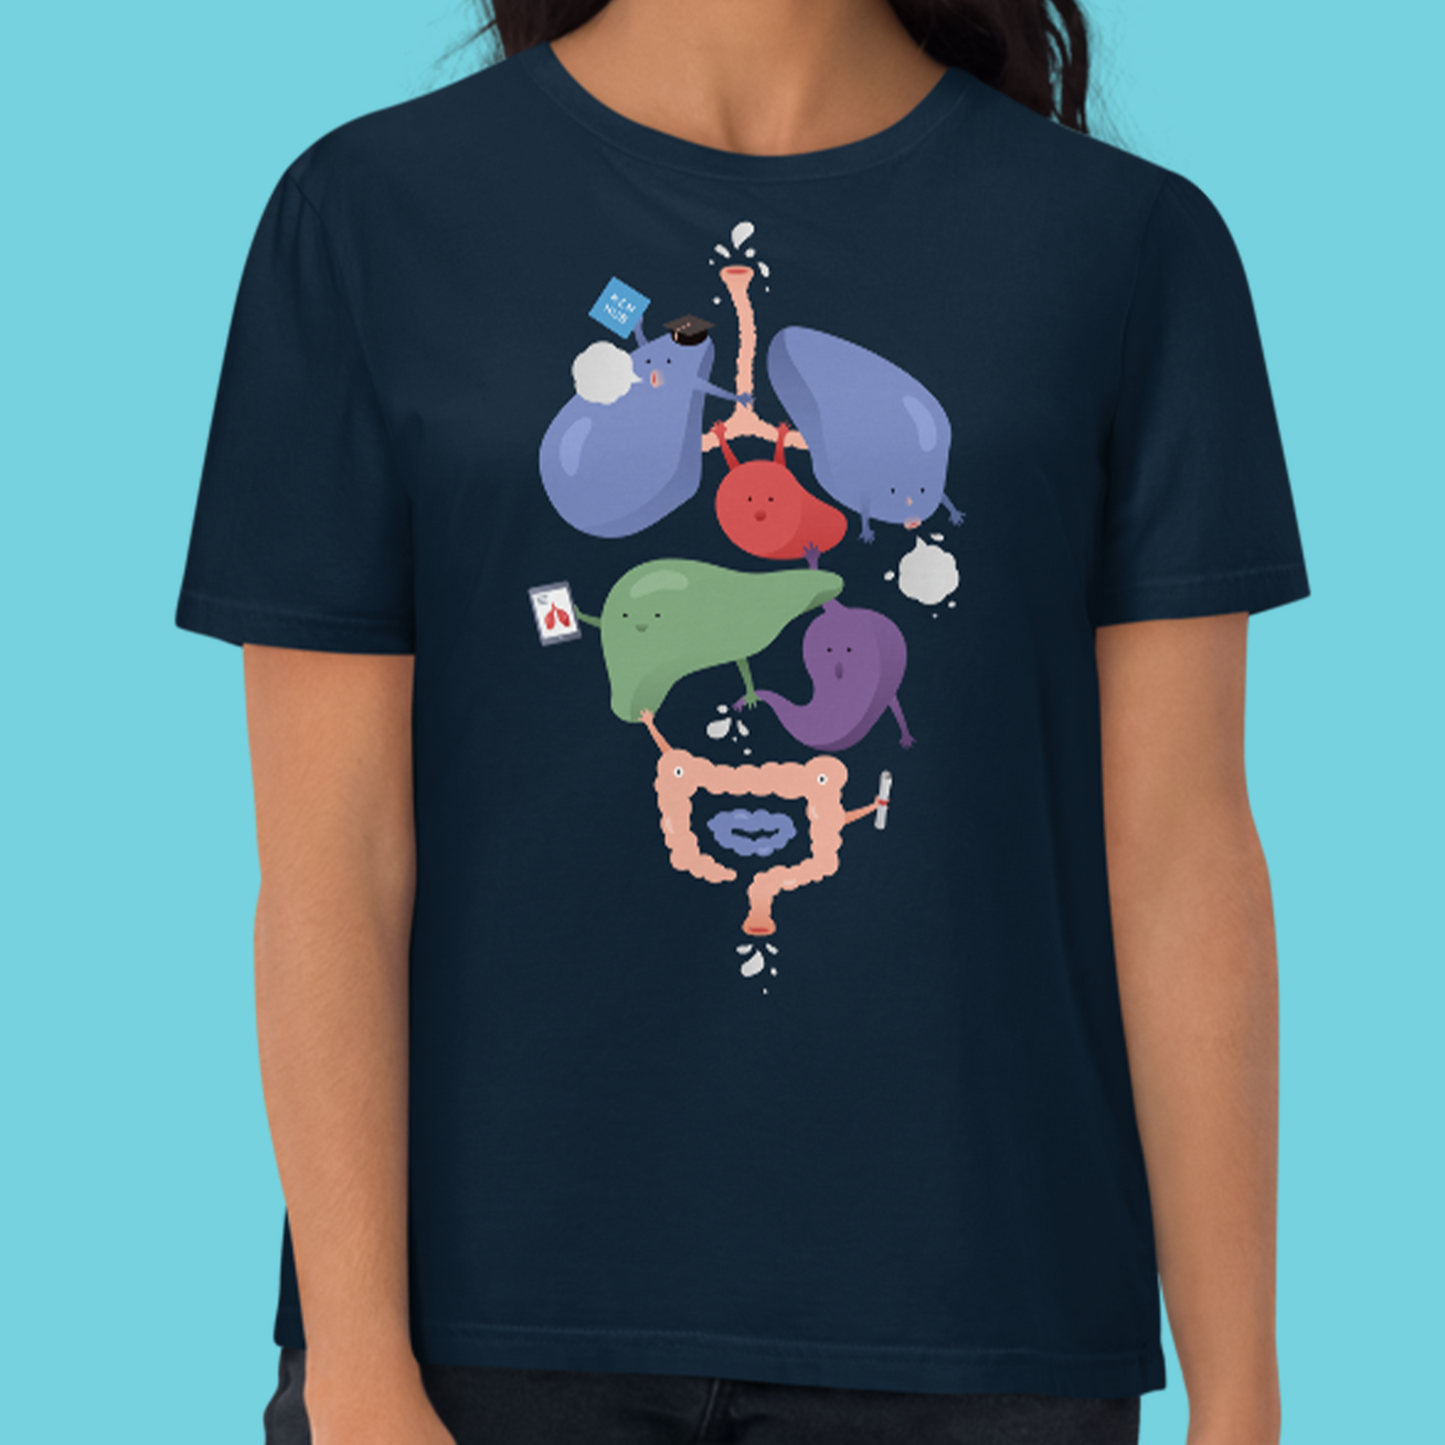 Cuddling Organs - T-Shirt